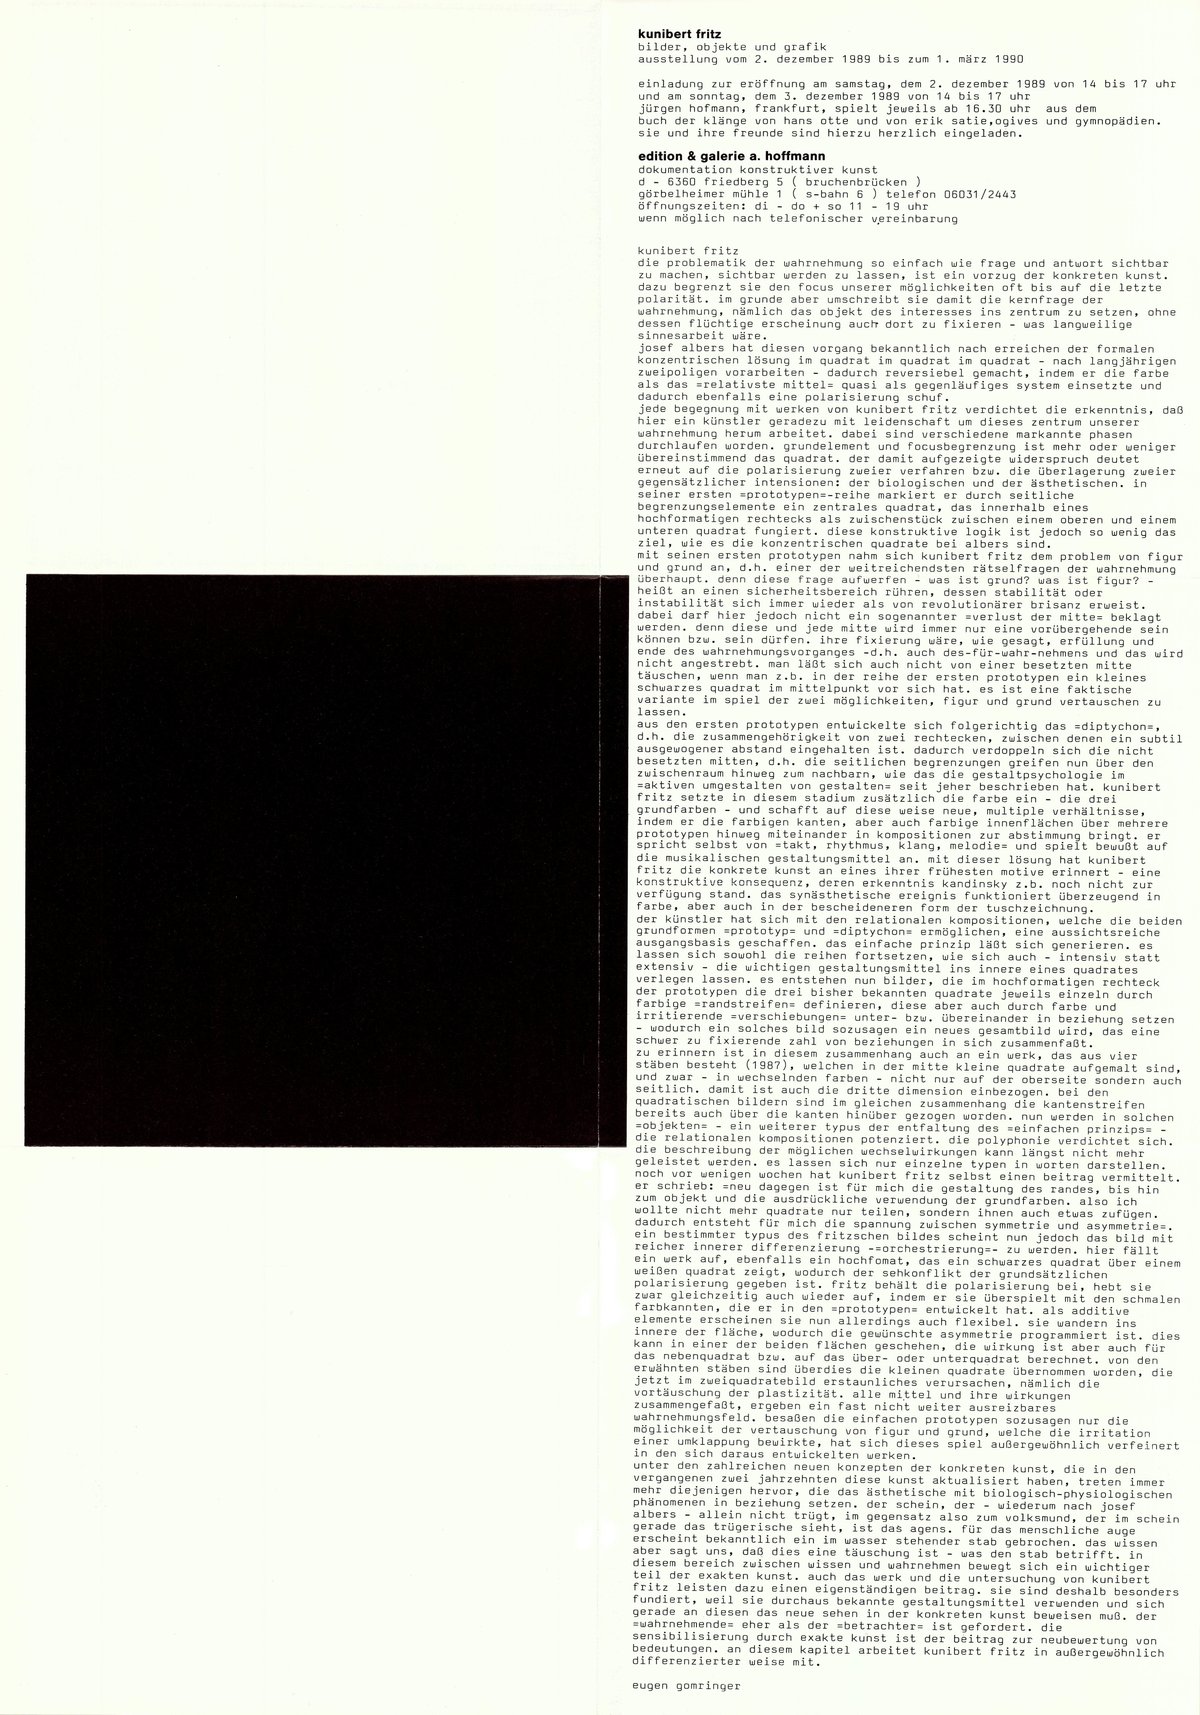 exhibition invitation: &quot;kunibert fritz—bilder, objekte und grafik&quot; by wolfgang schmidt, 1989